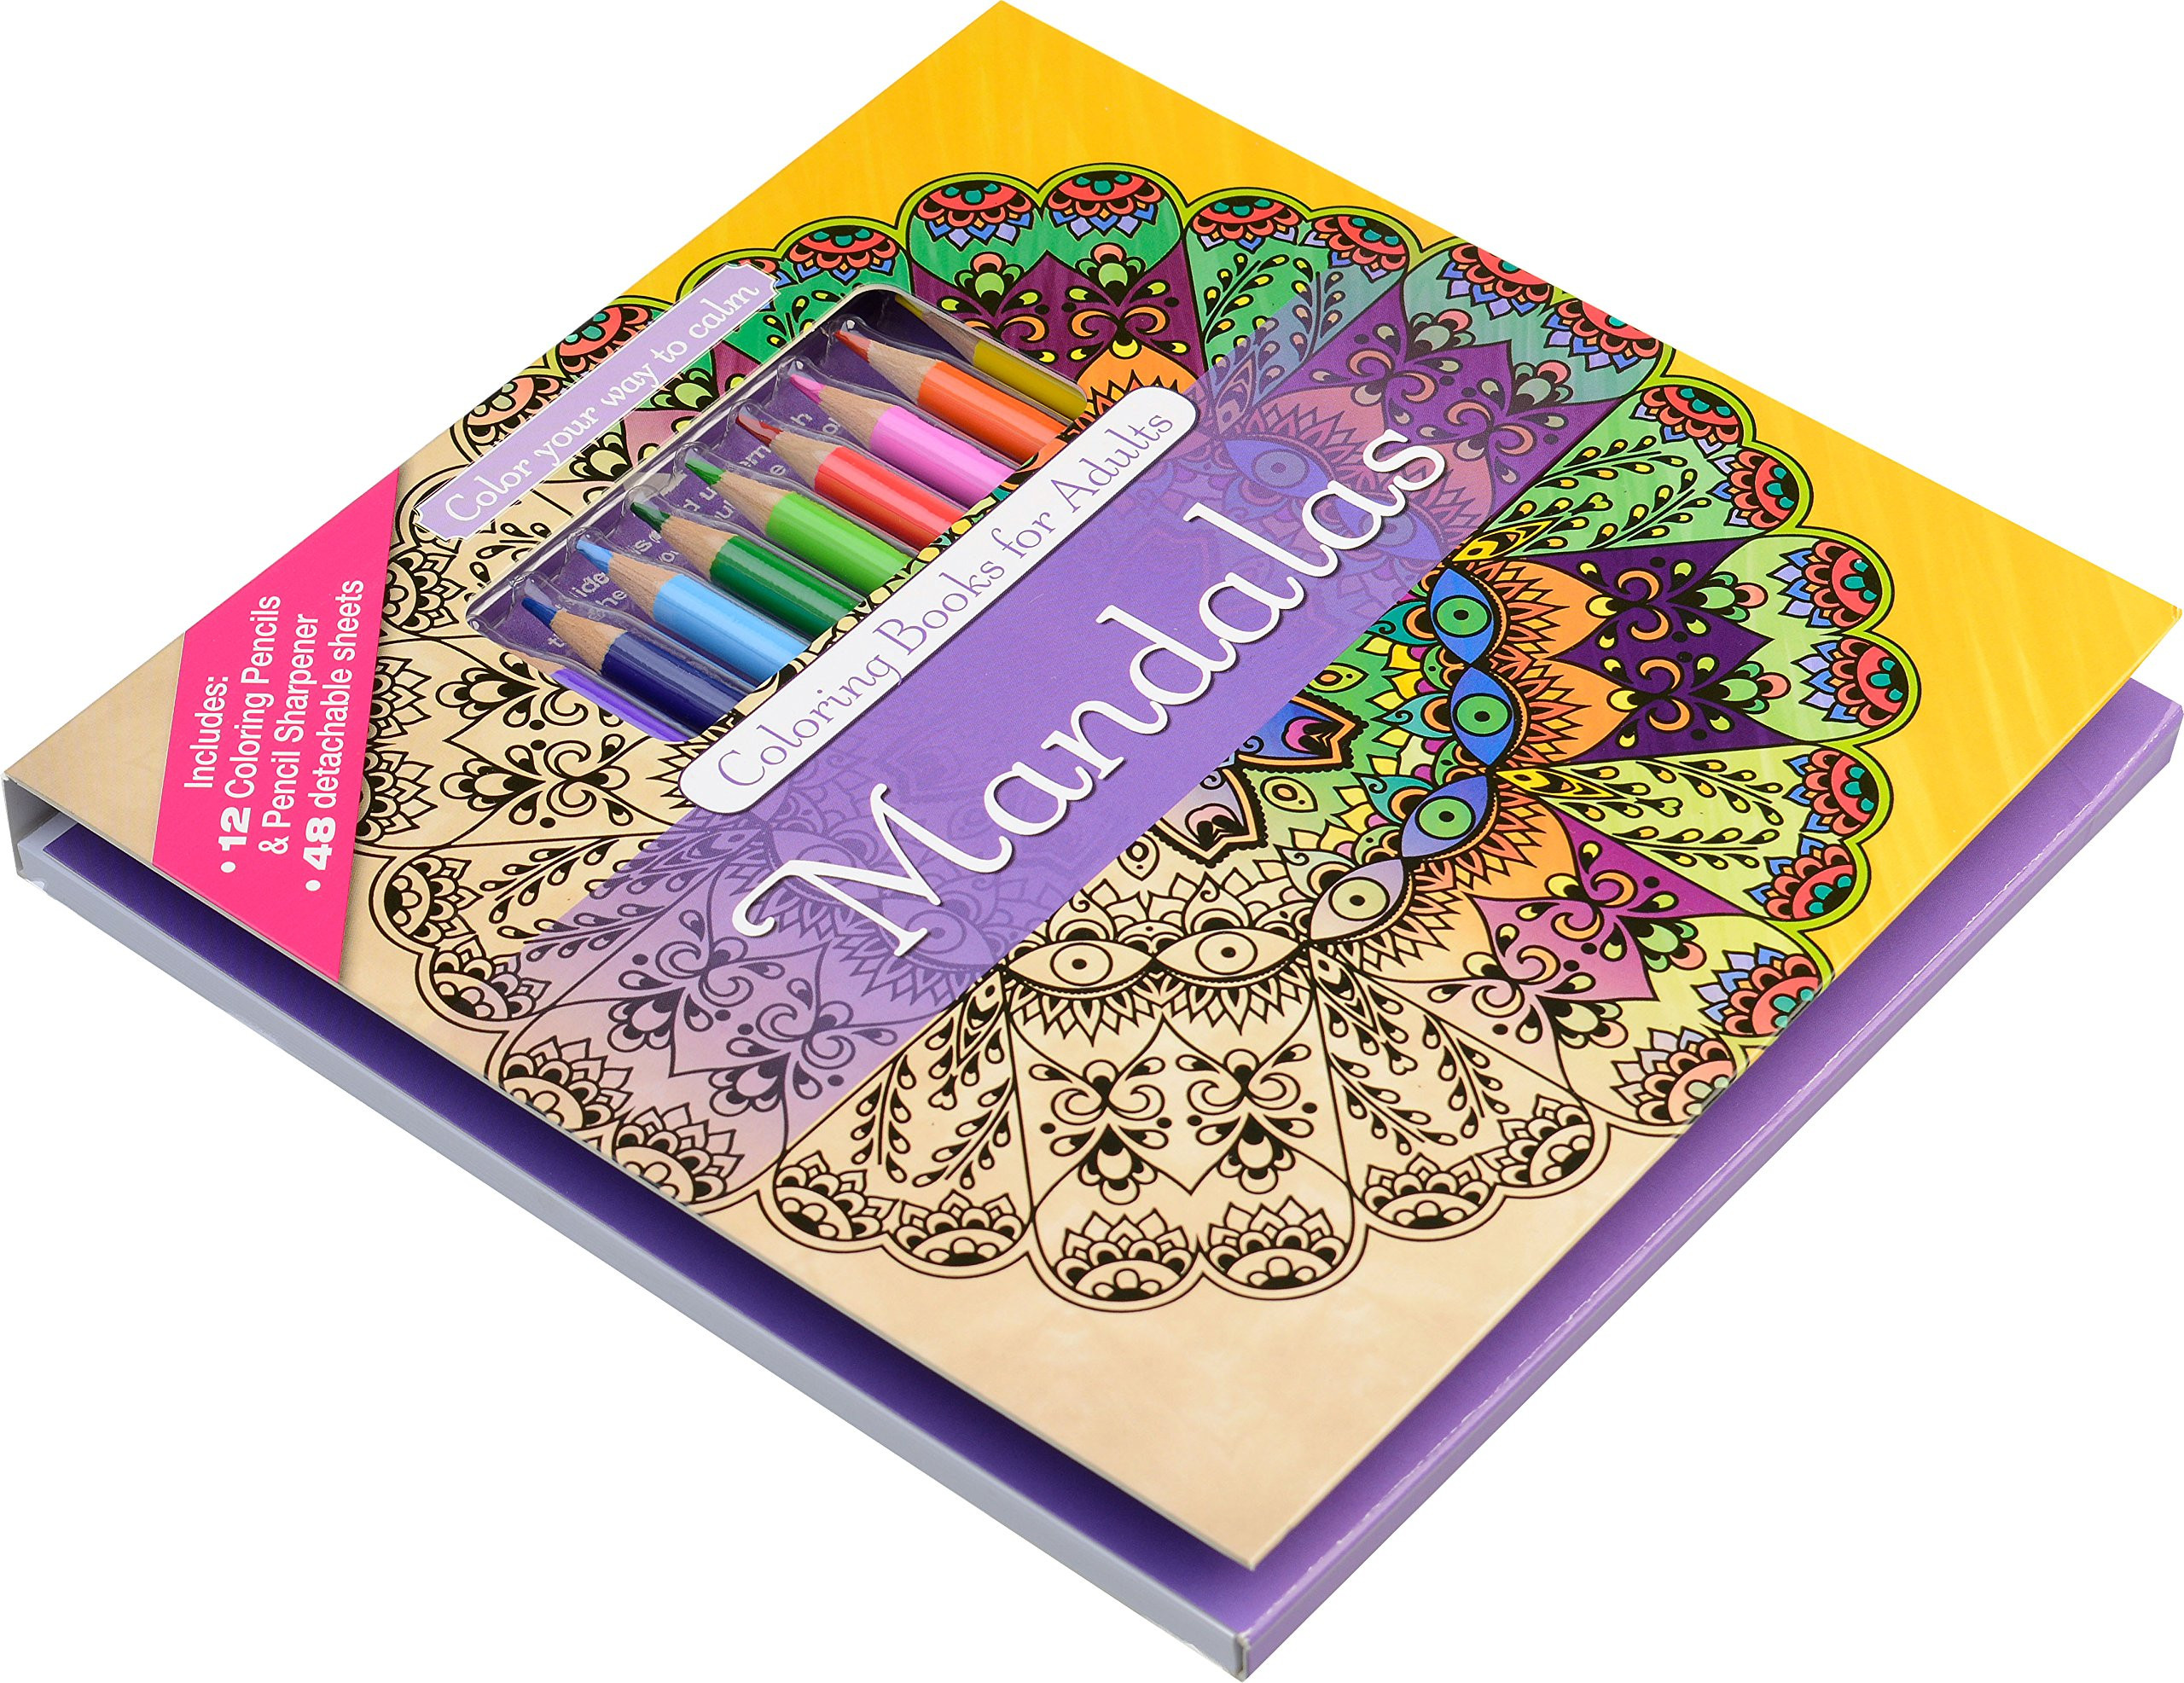 Adult Coloring Books And Pencils
 Mandalas Adult Coloring Book Set With 24 Colored Pencils